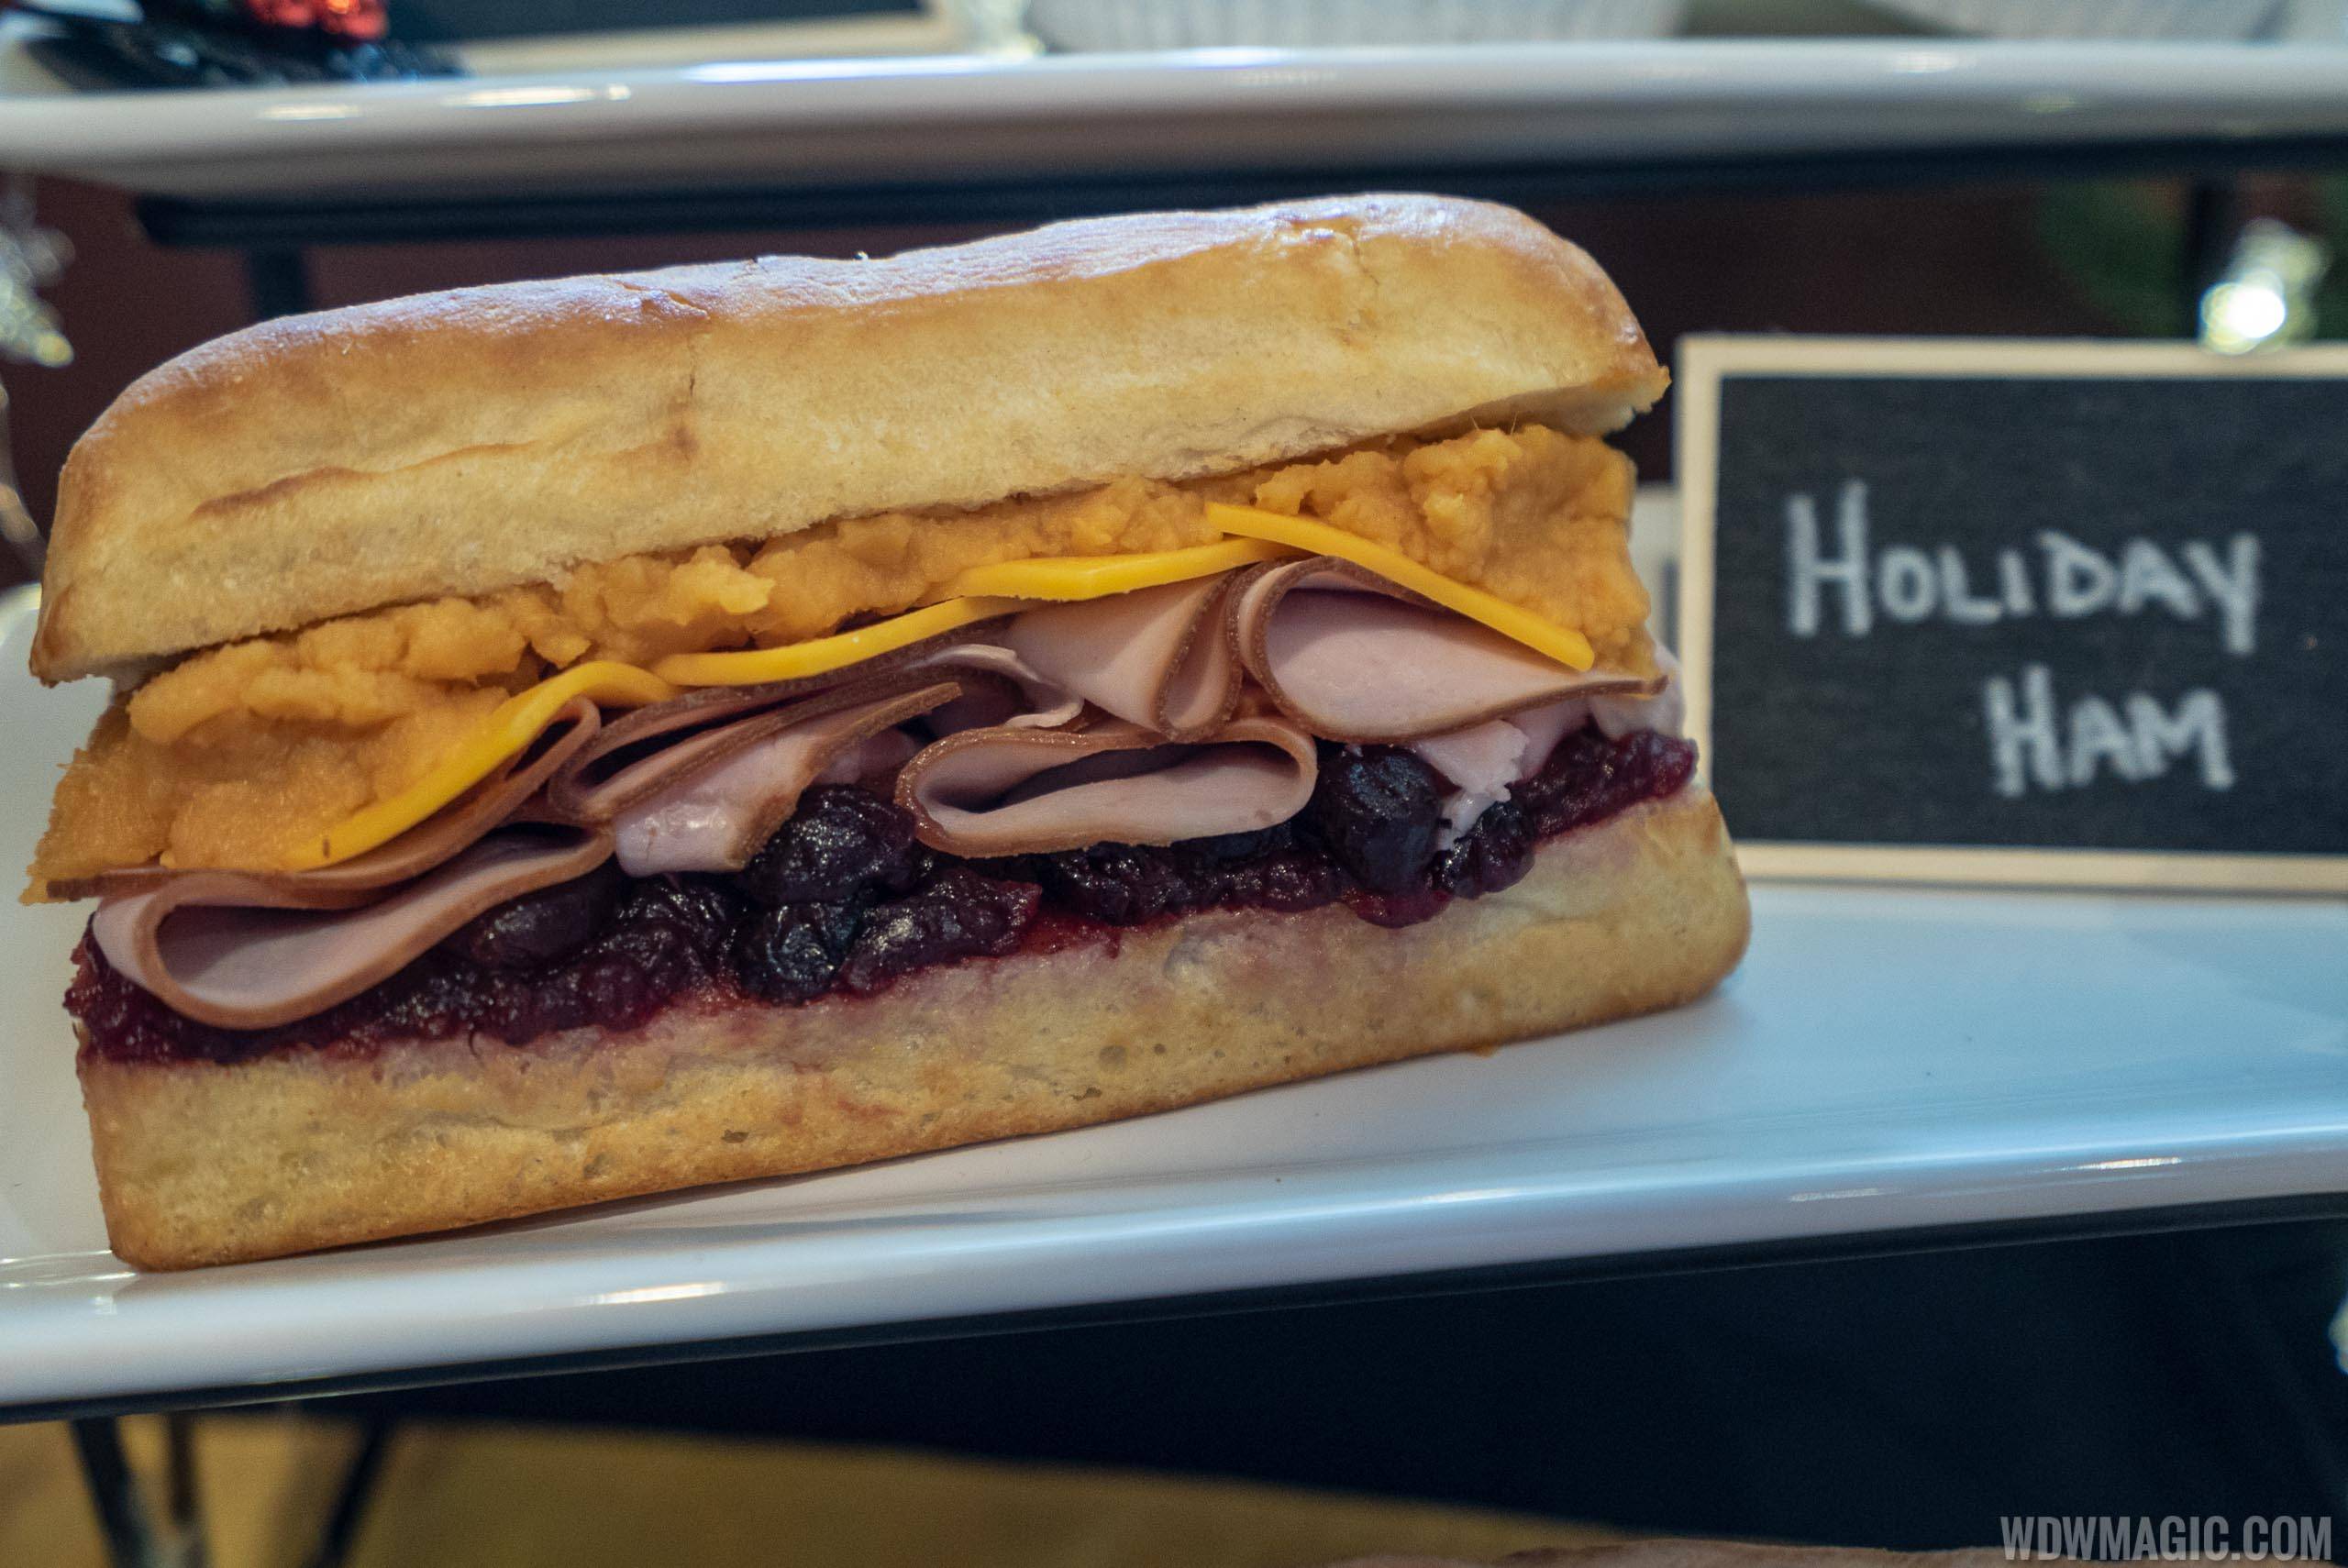 Earl of Sandwich - Holiday Ham Sandwich